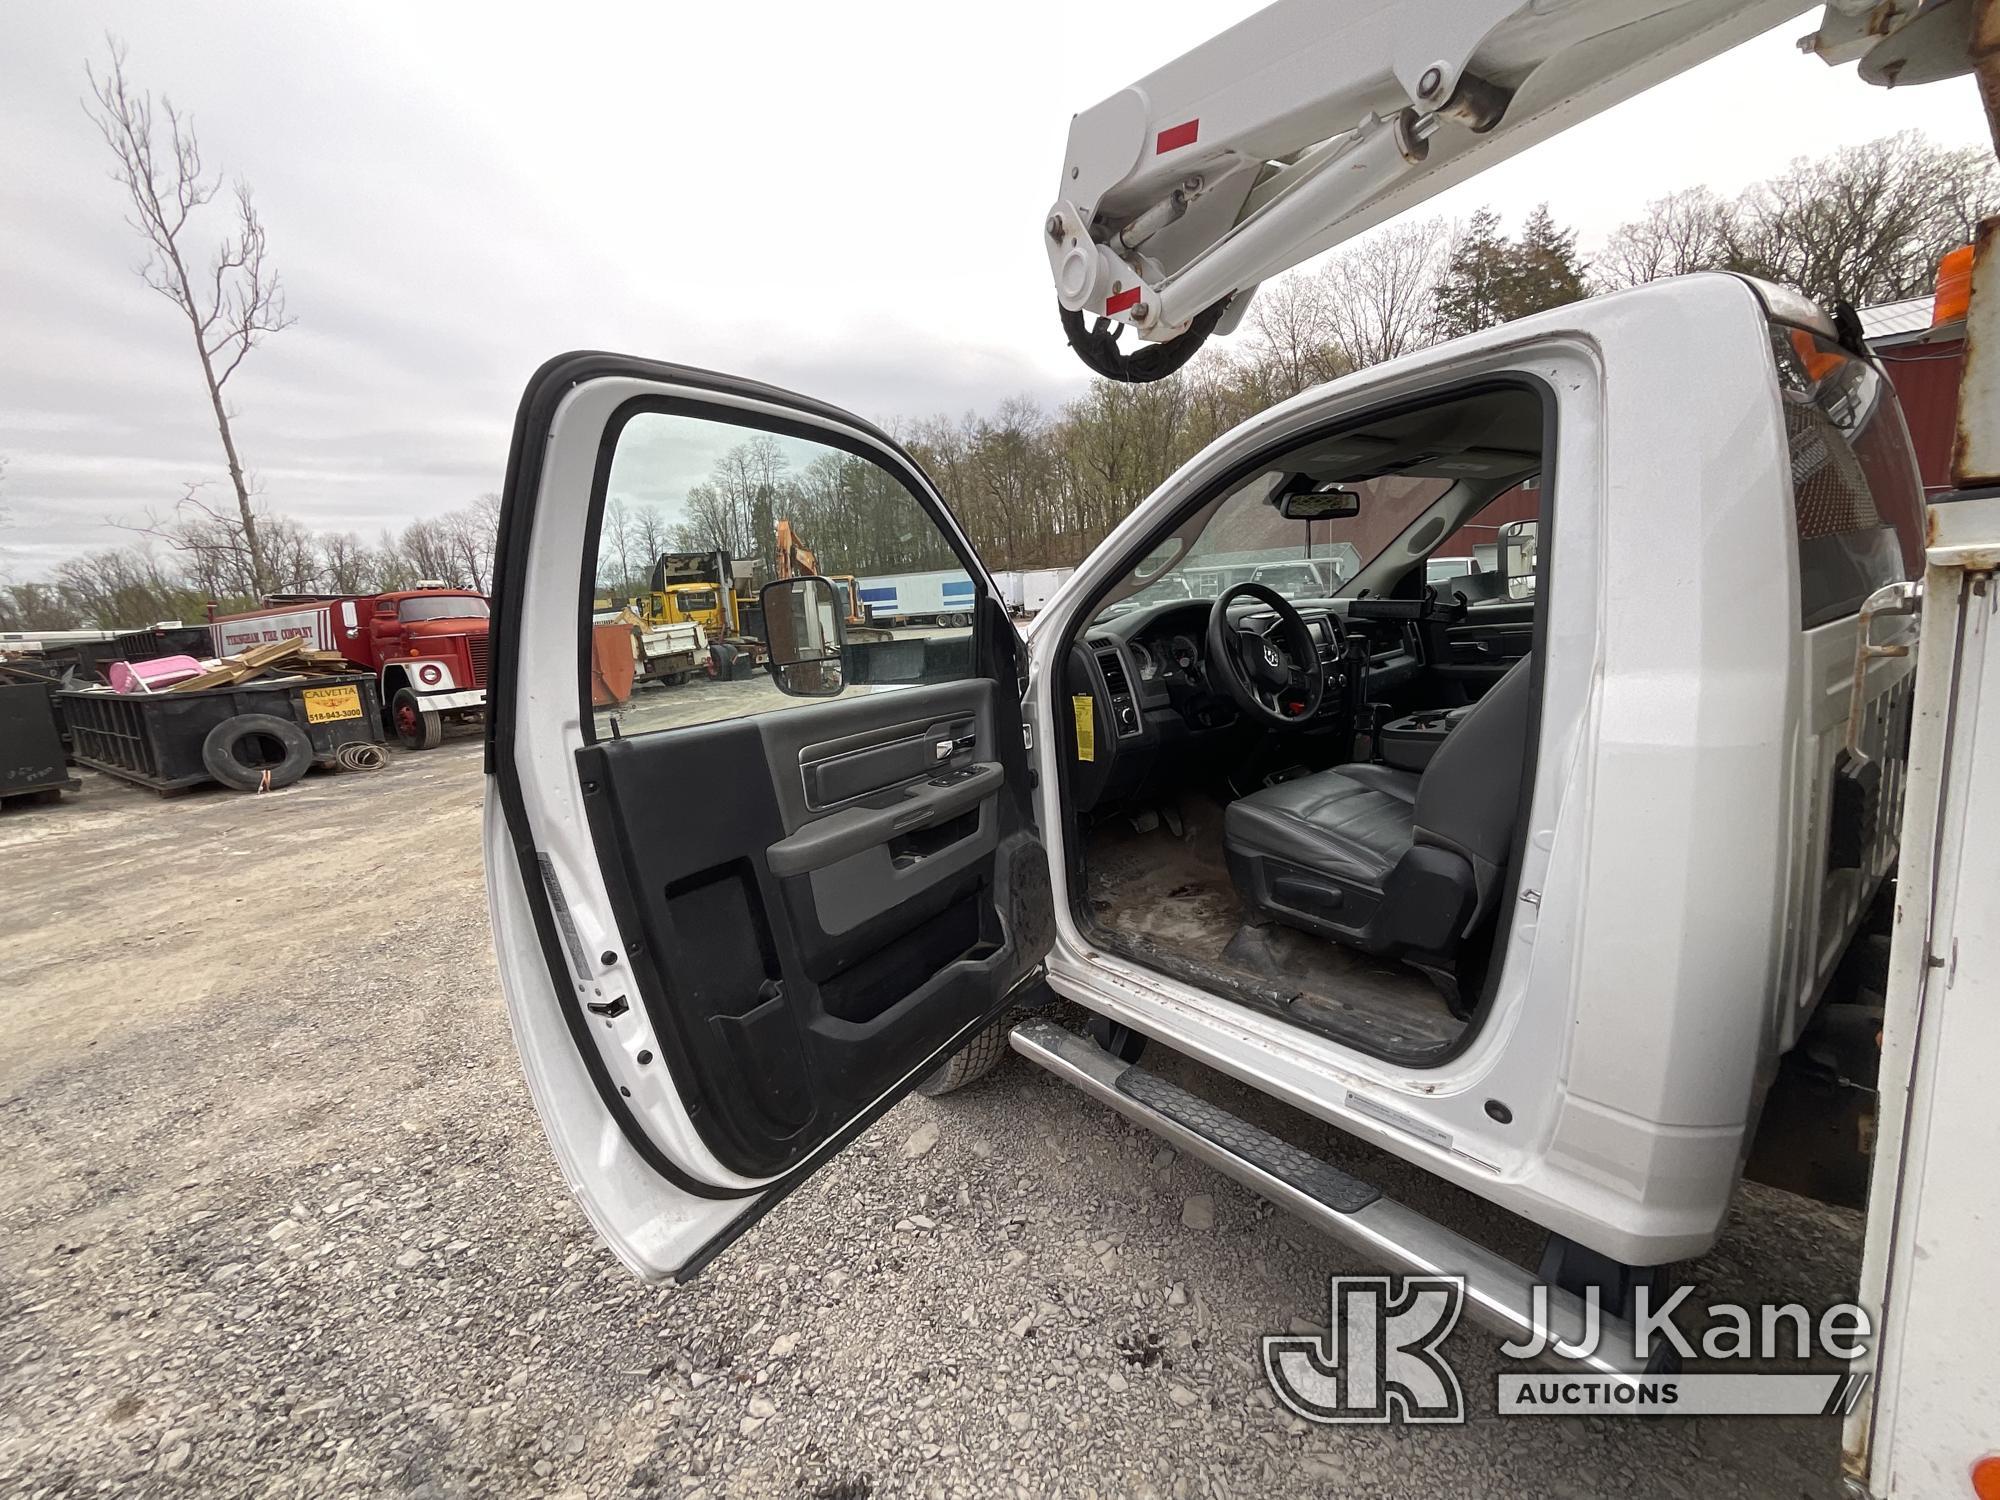 (Catskill, NY) ETI ETC40IH, Articulating & Telescopic Bucket Truck mounted behind cab on 2016 RAM 55